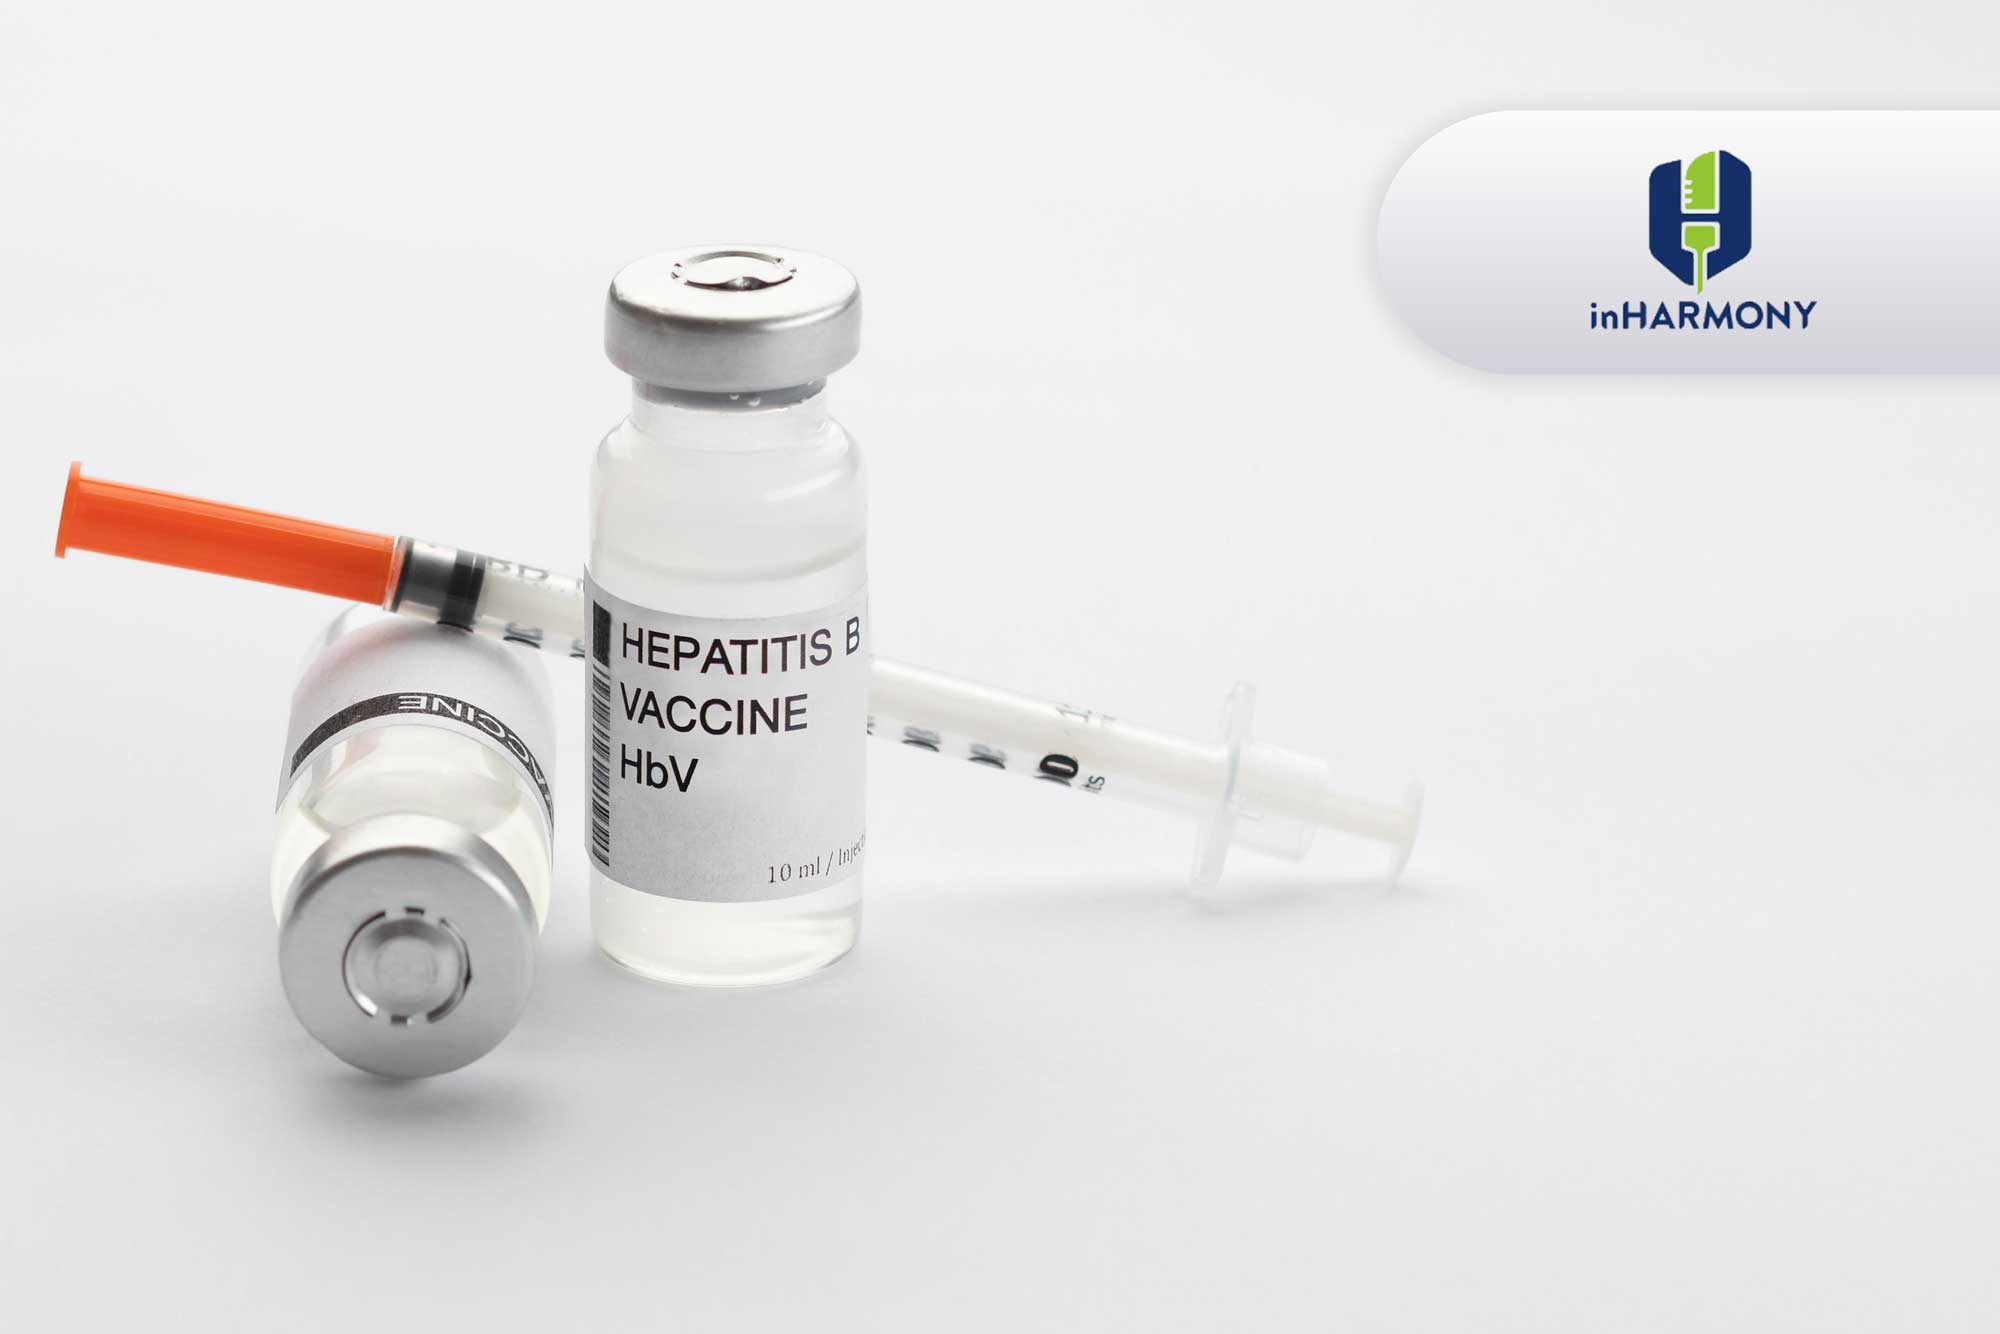 vaksin-hepatitis-B-inharmony_1691391291.jpg